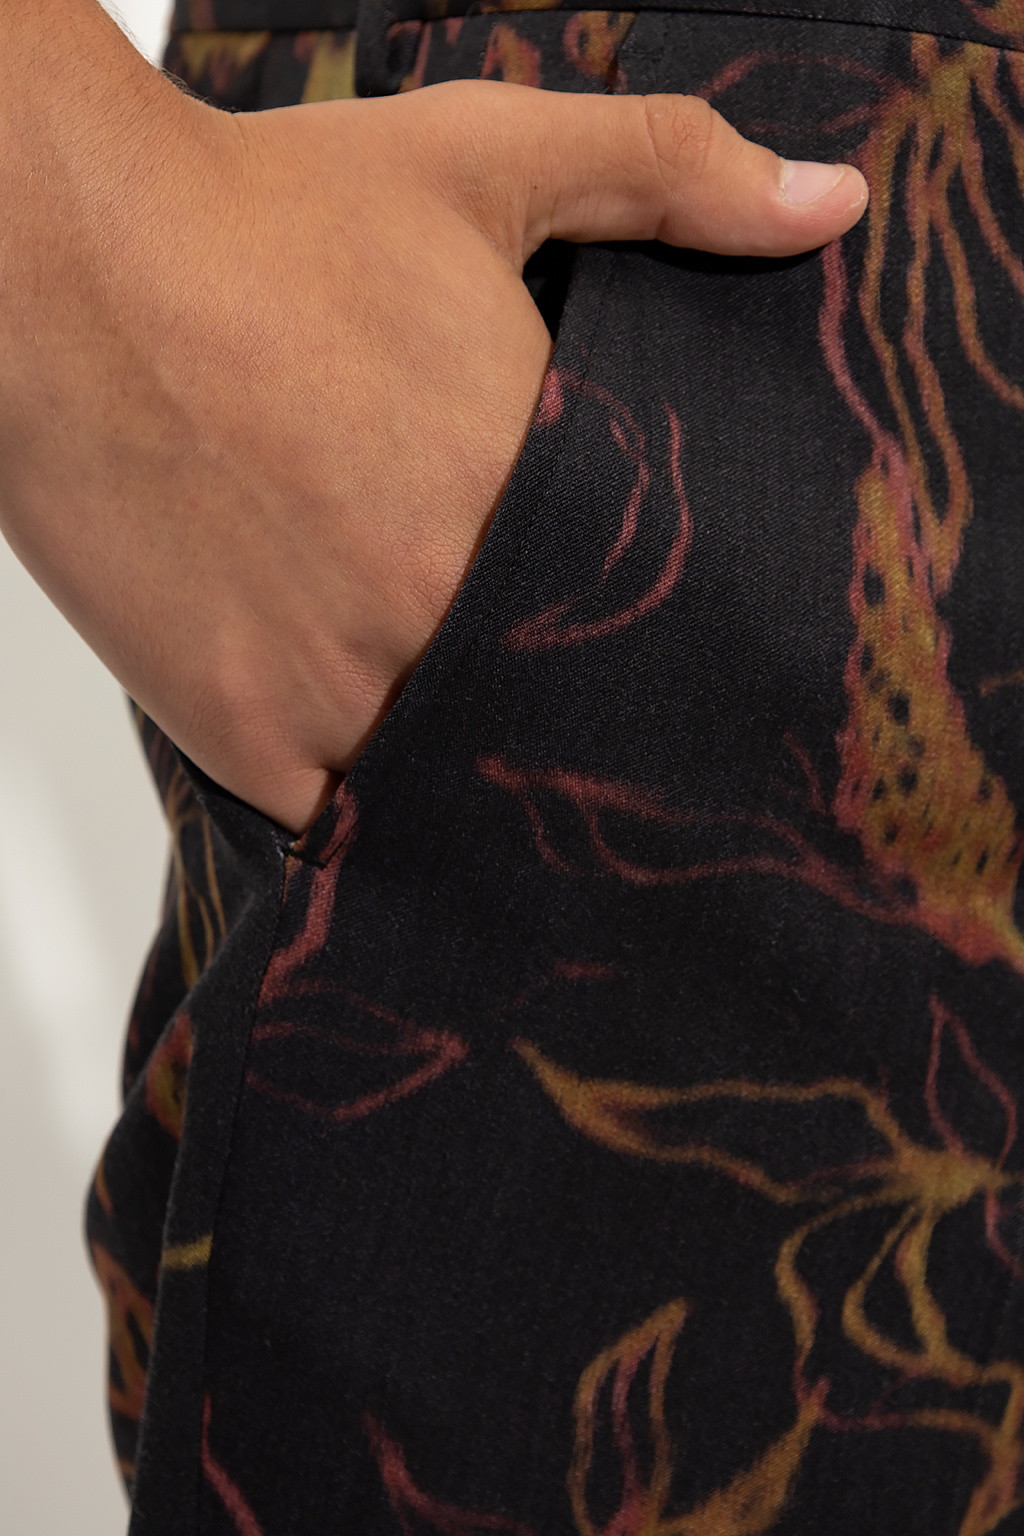 Dries Van Noten trousers slip with floral motif